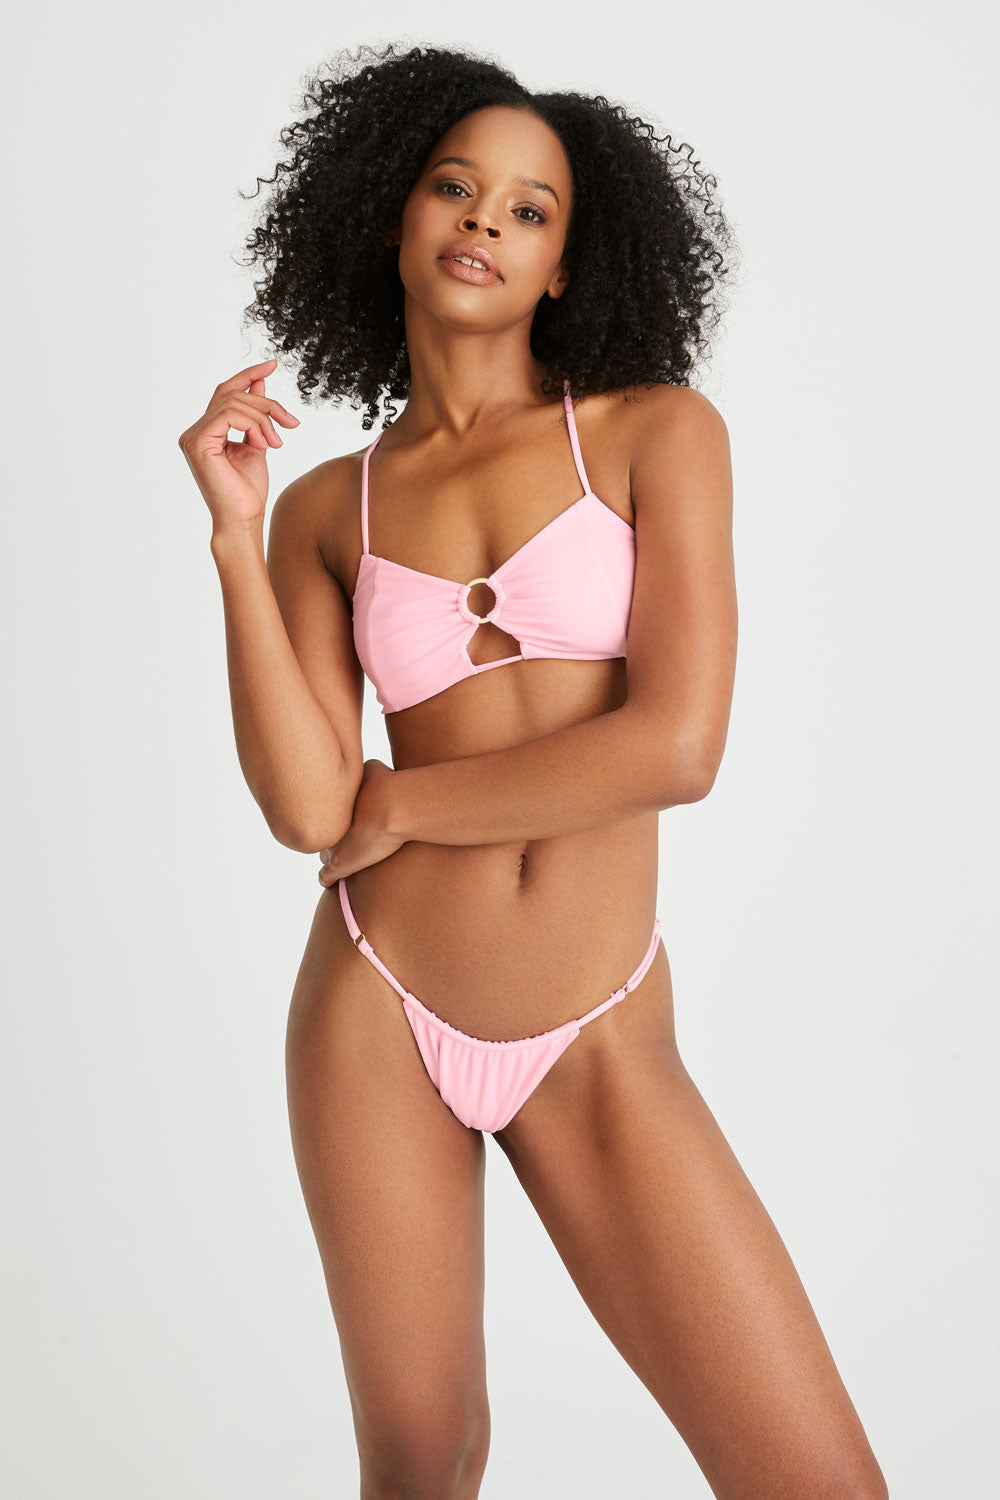 Woman wears padded pink bikini top with matching bikini bottoms